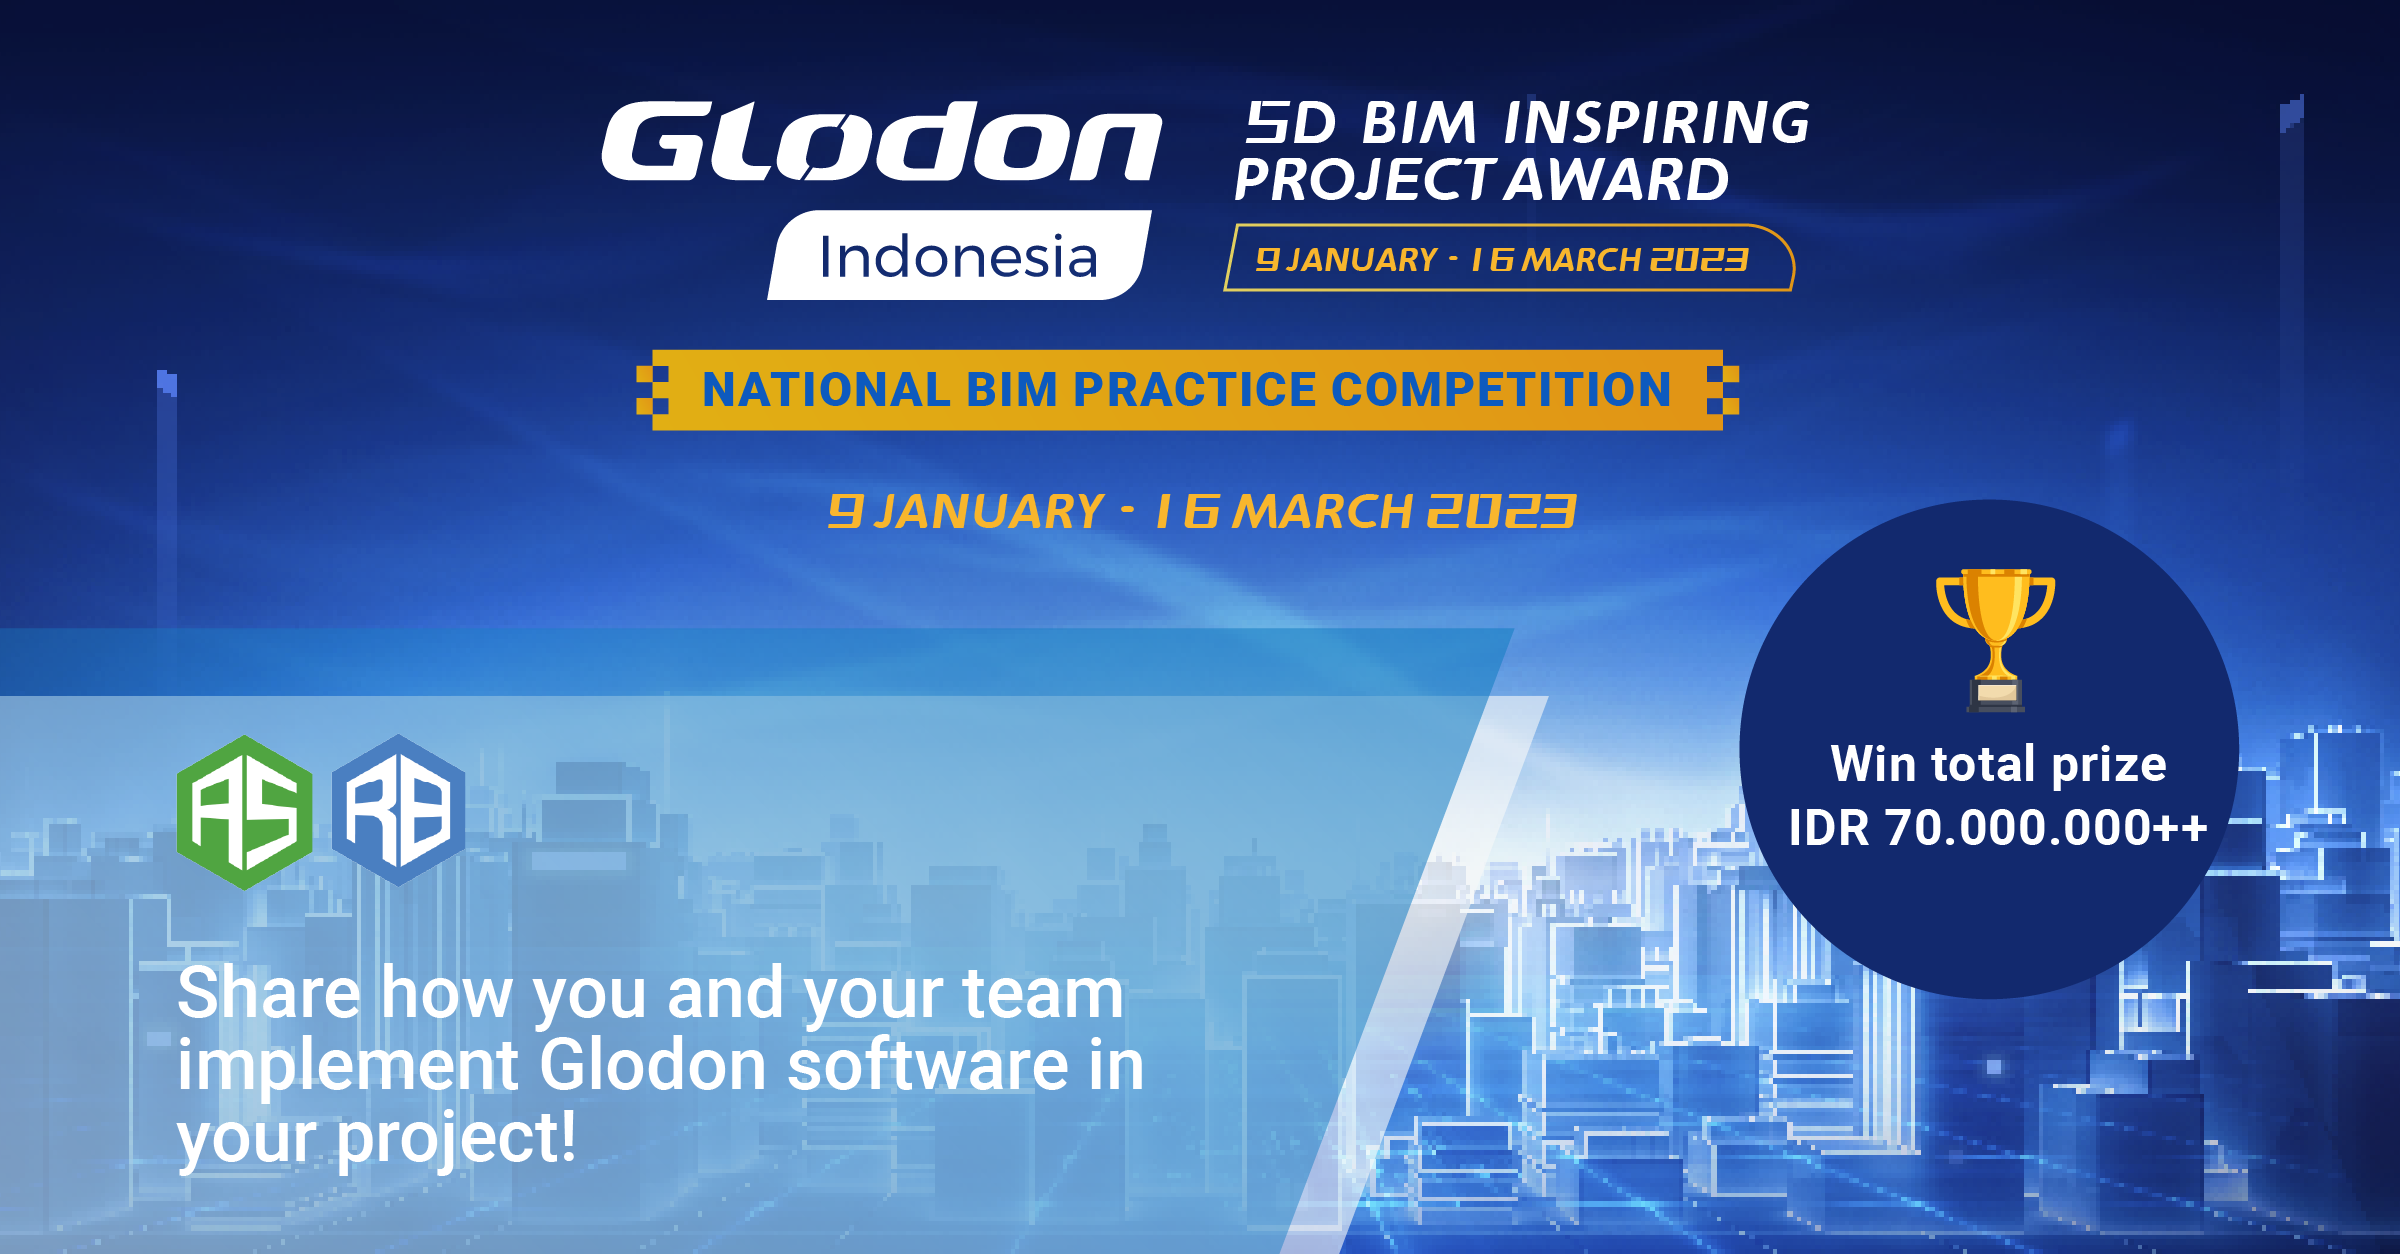 Glodon 5D BIM Inspiring Project Award in Indonesia